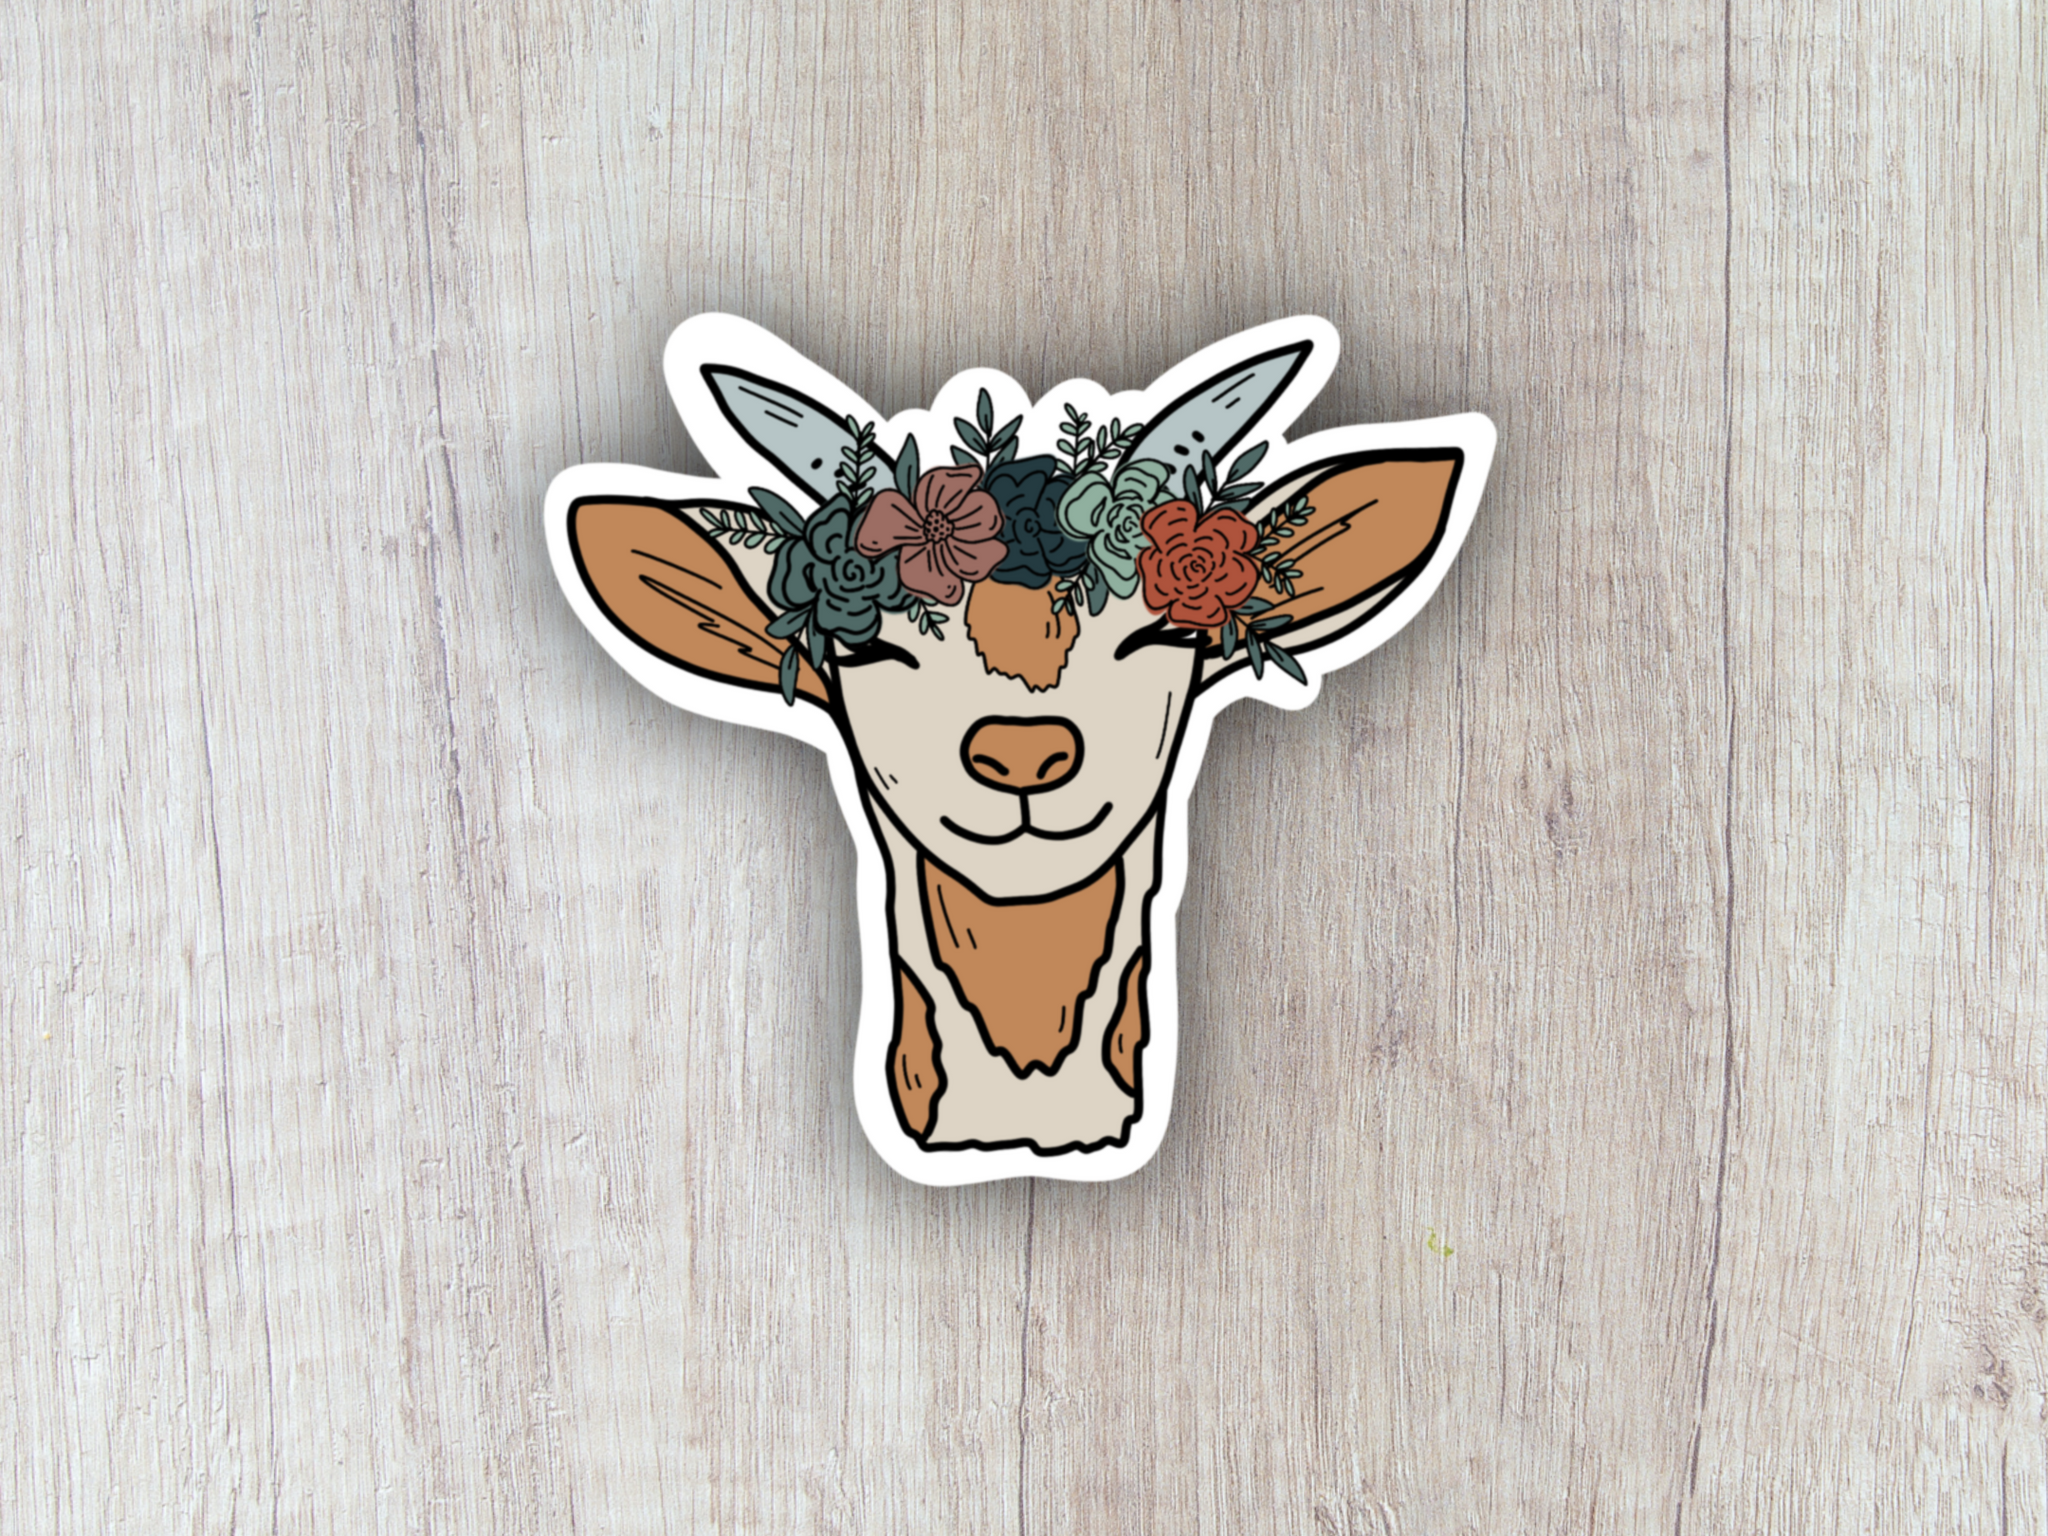 "Goat" Sticker